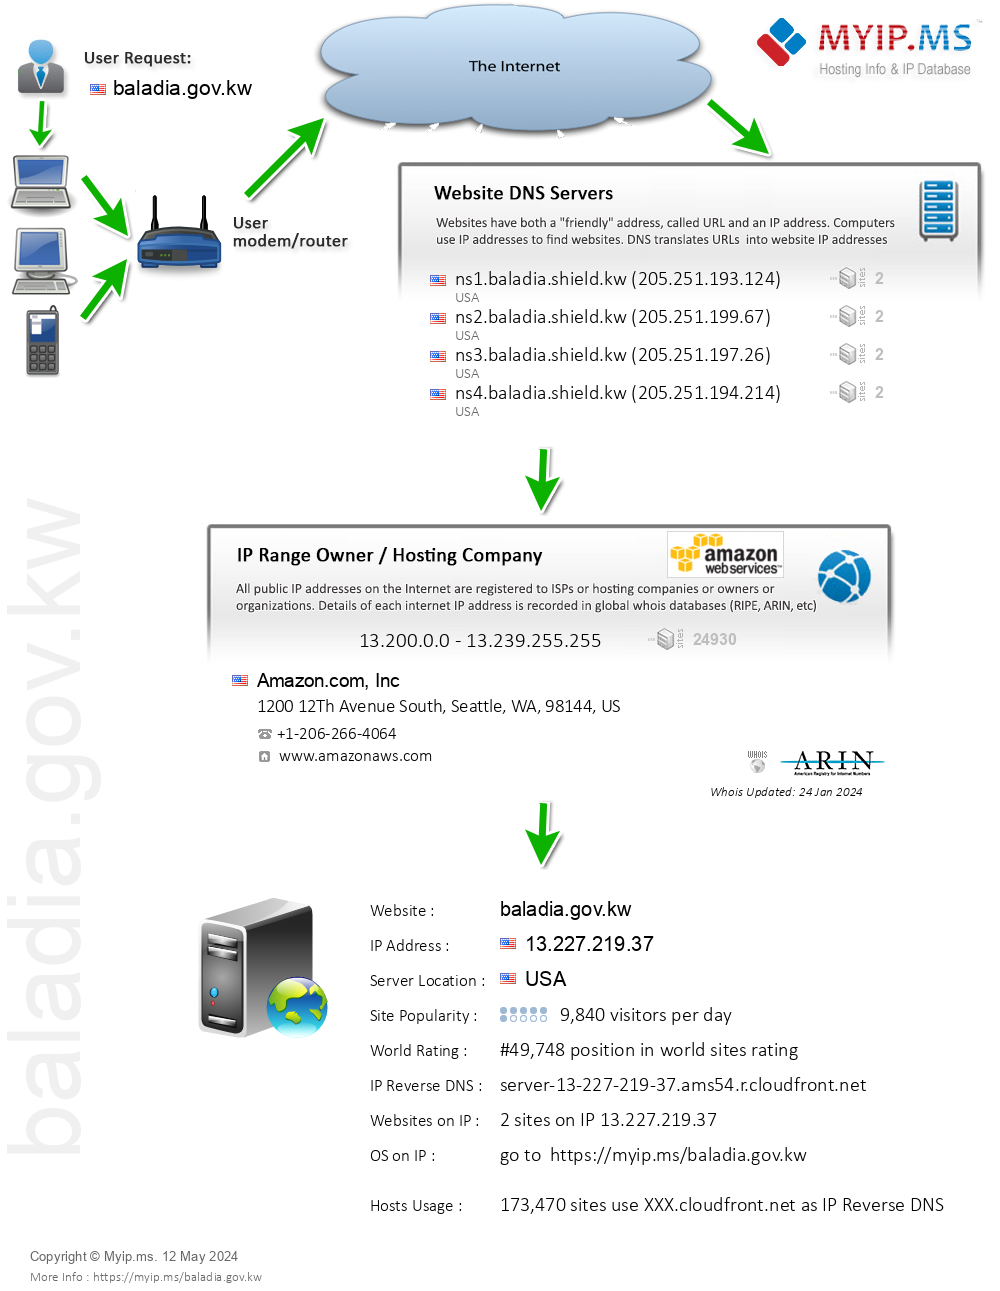 Baladia.gov.kw - Website Hosting Visual IP Diagram